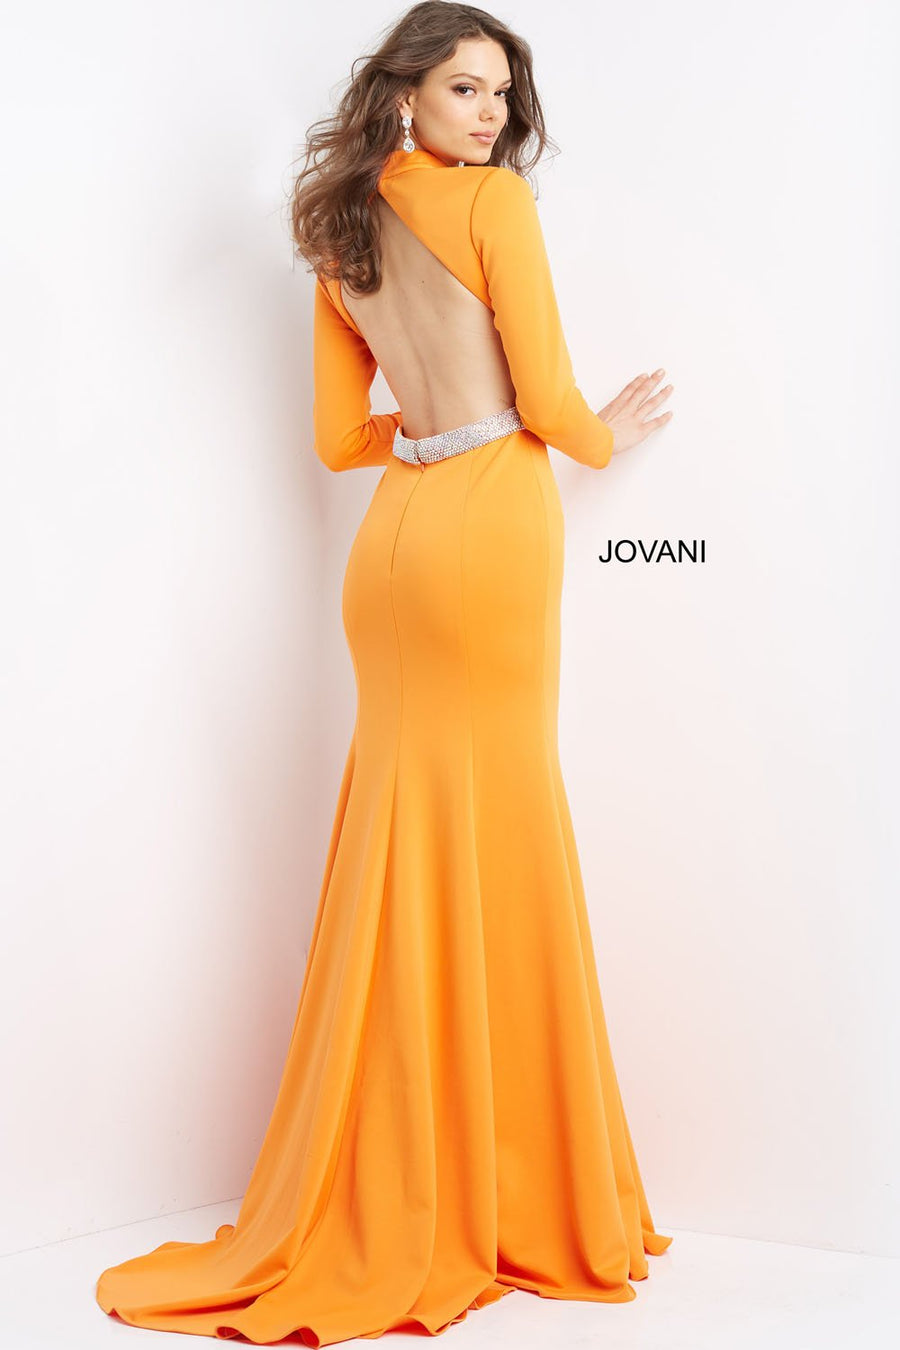 Jovani 07392 Orange prom dresses images.